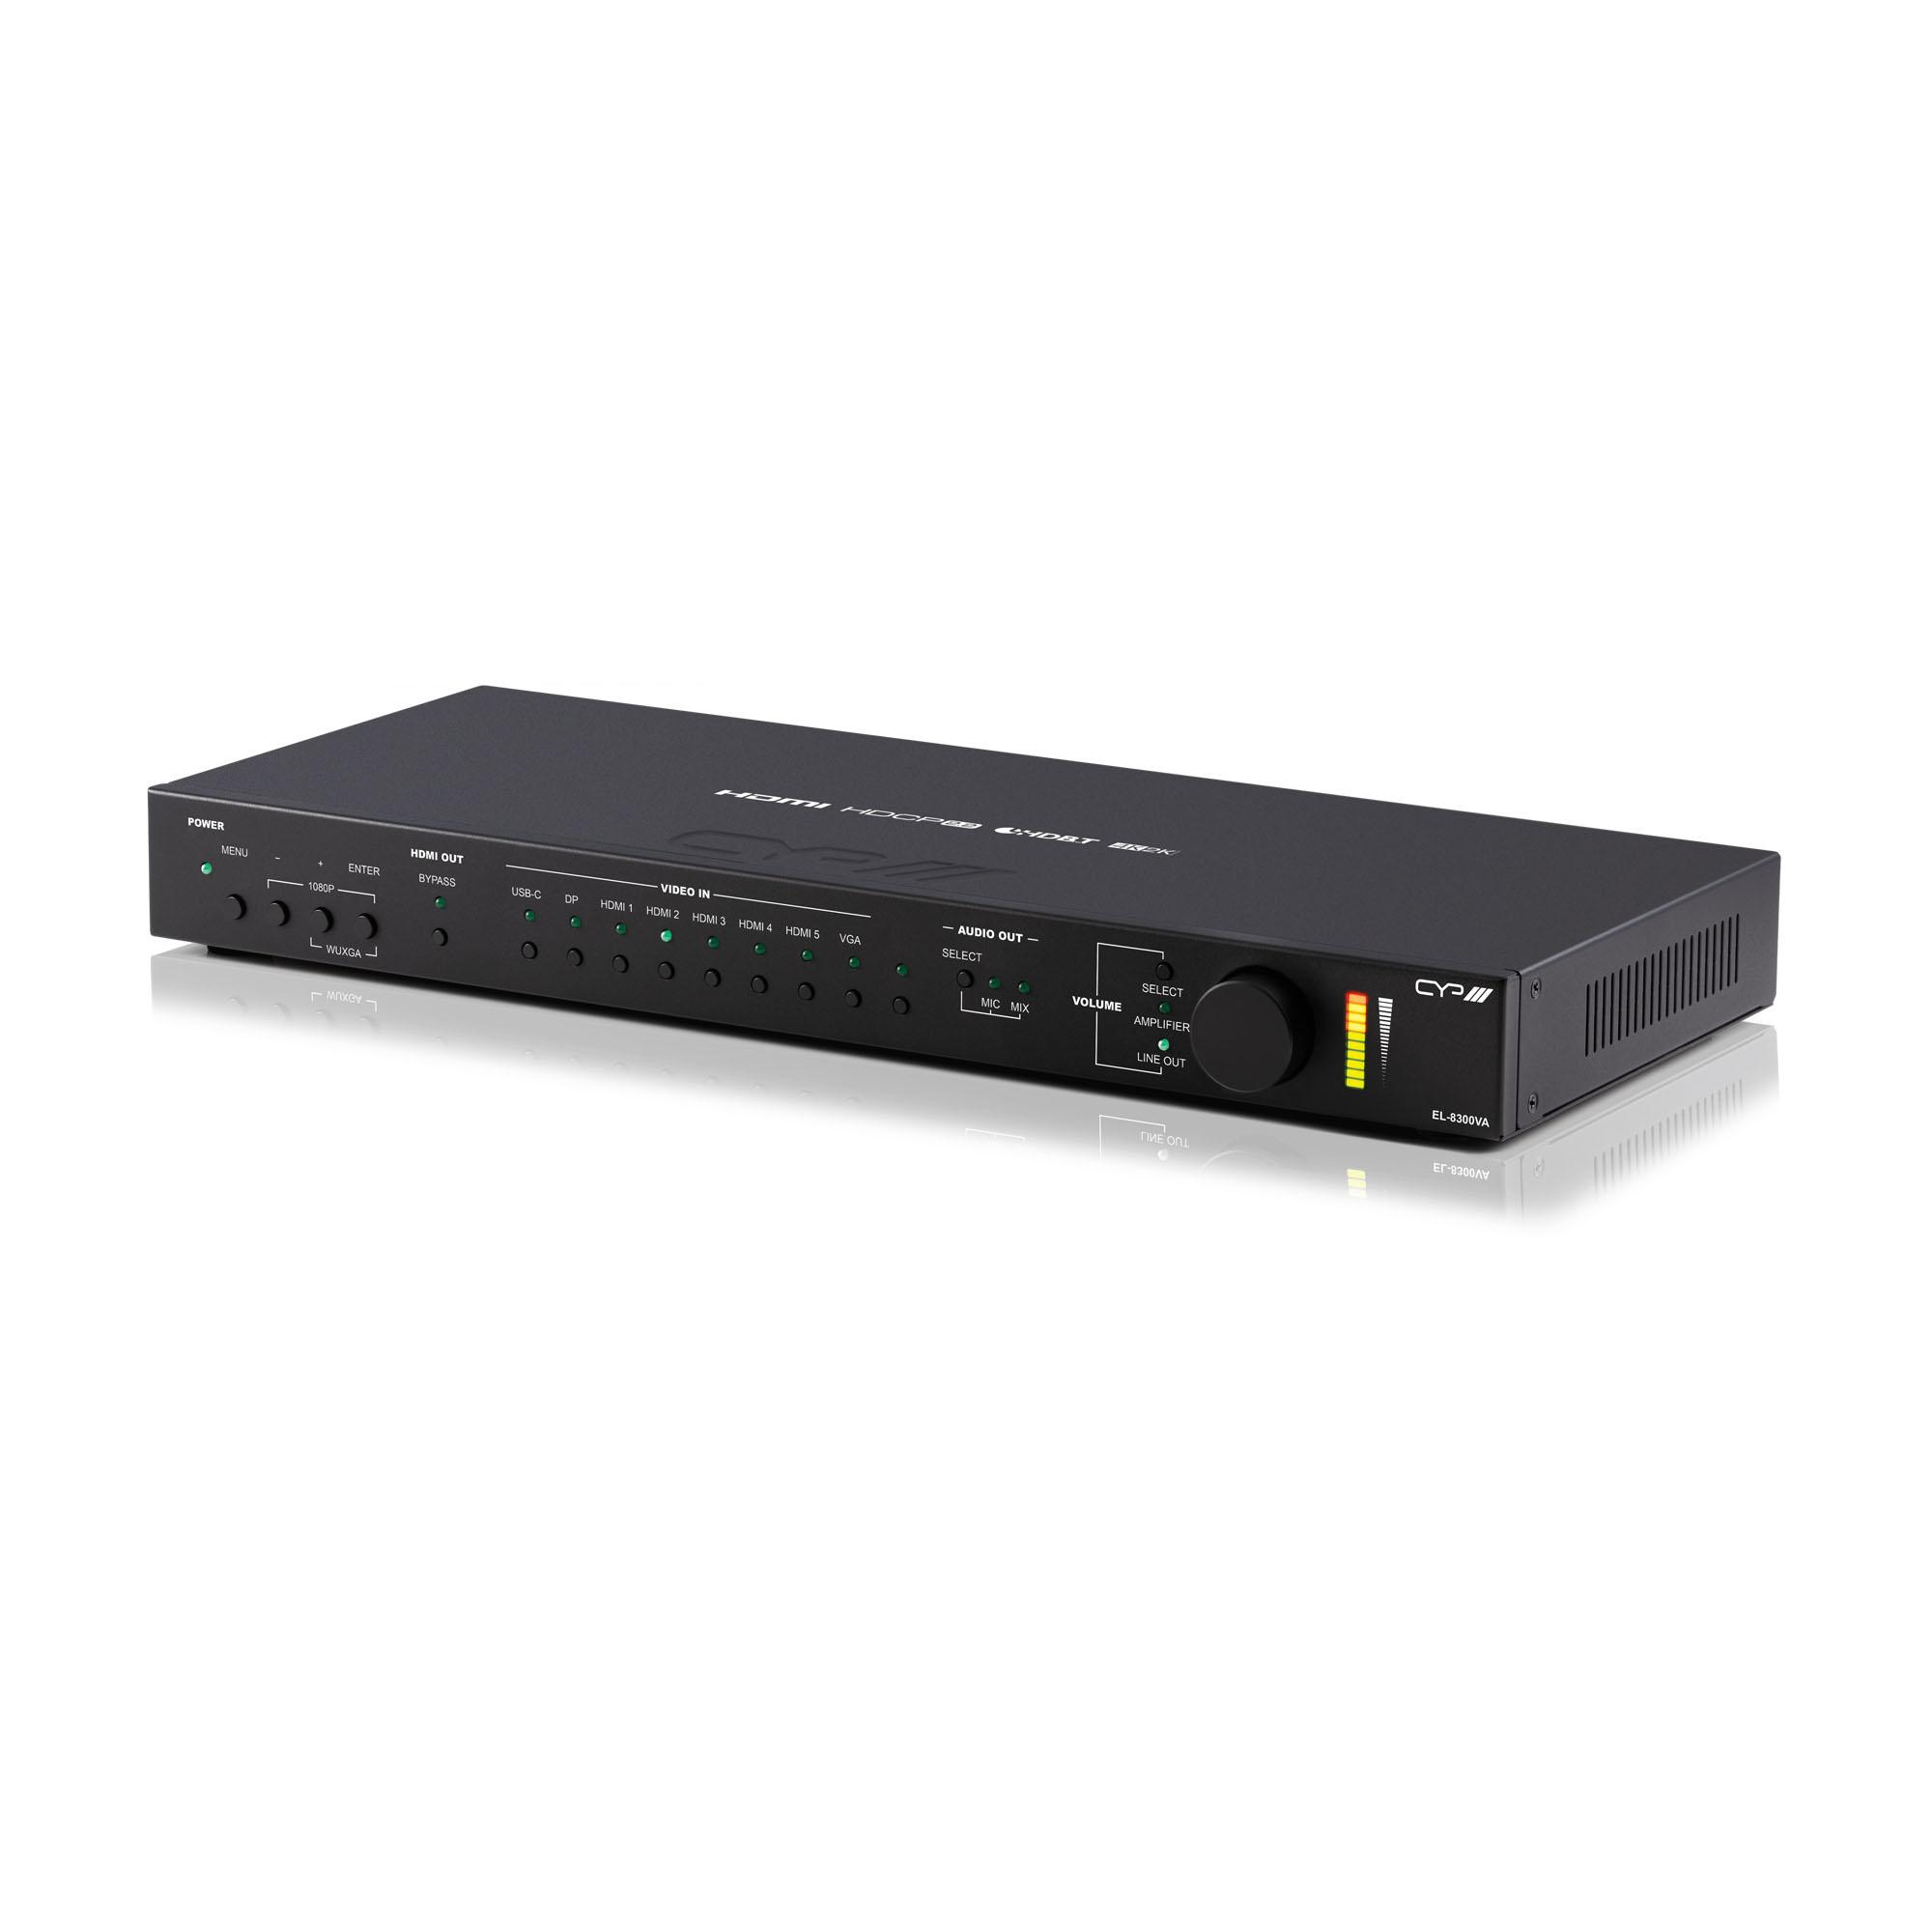 EL-8300VA UHD+ 8x2 Multi-Format to HDMI/HDBT Switcher with Scaler